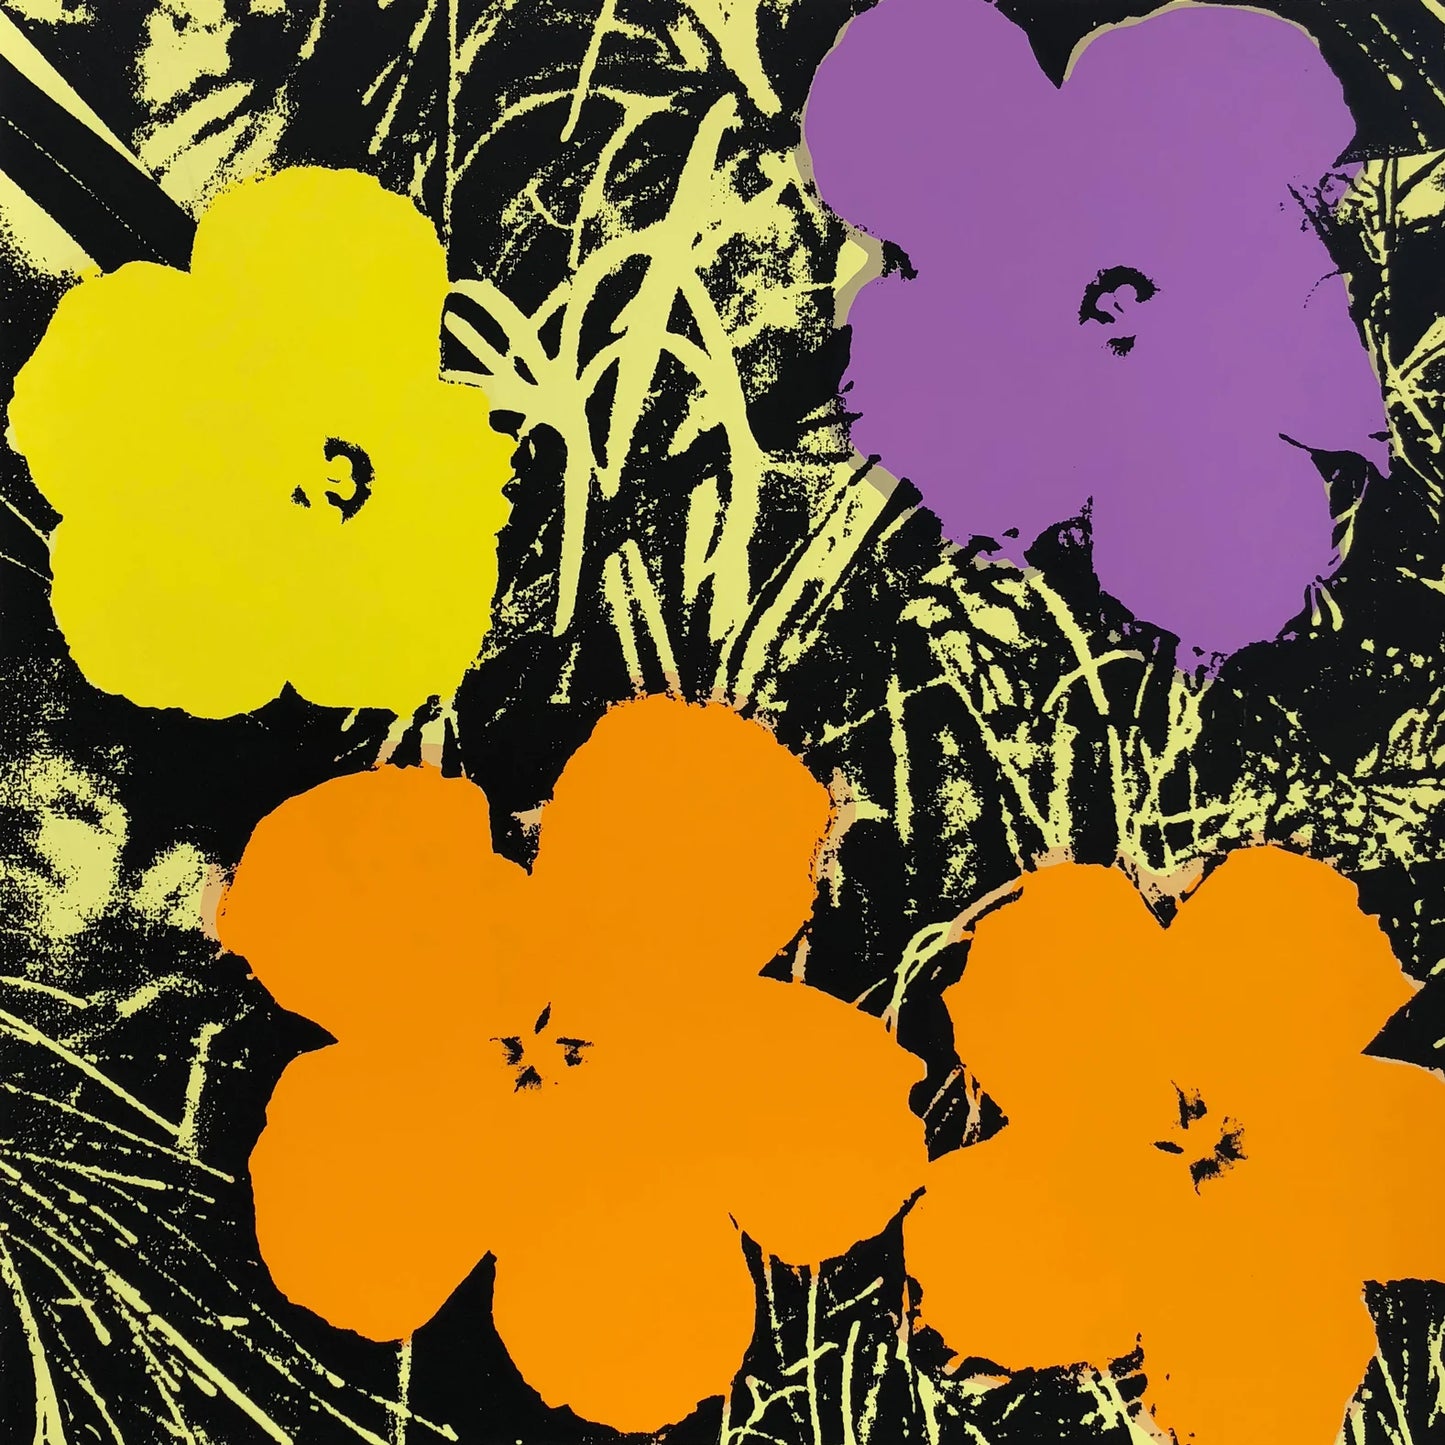 Sunday B. Morning (Andy Warhol), Flowers 11:67